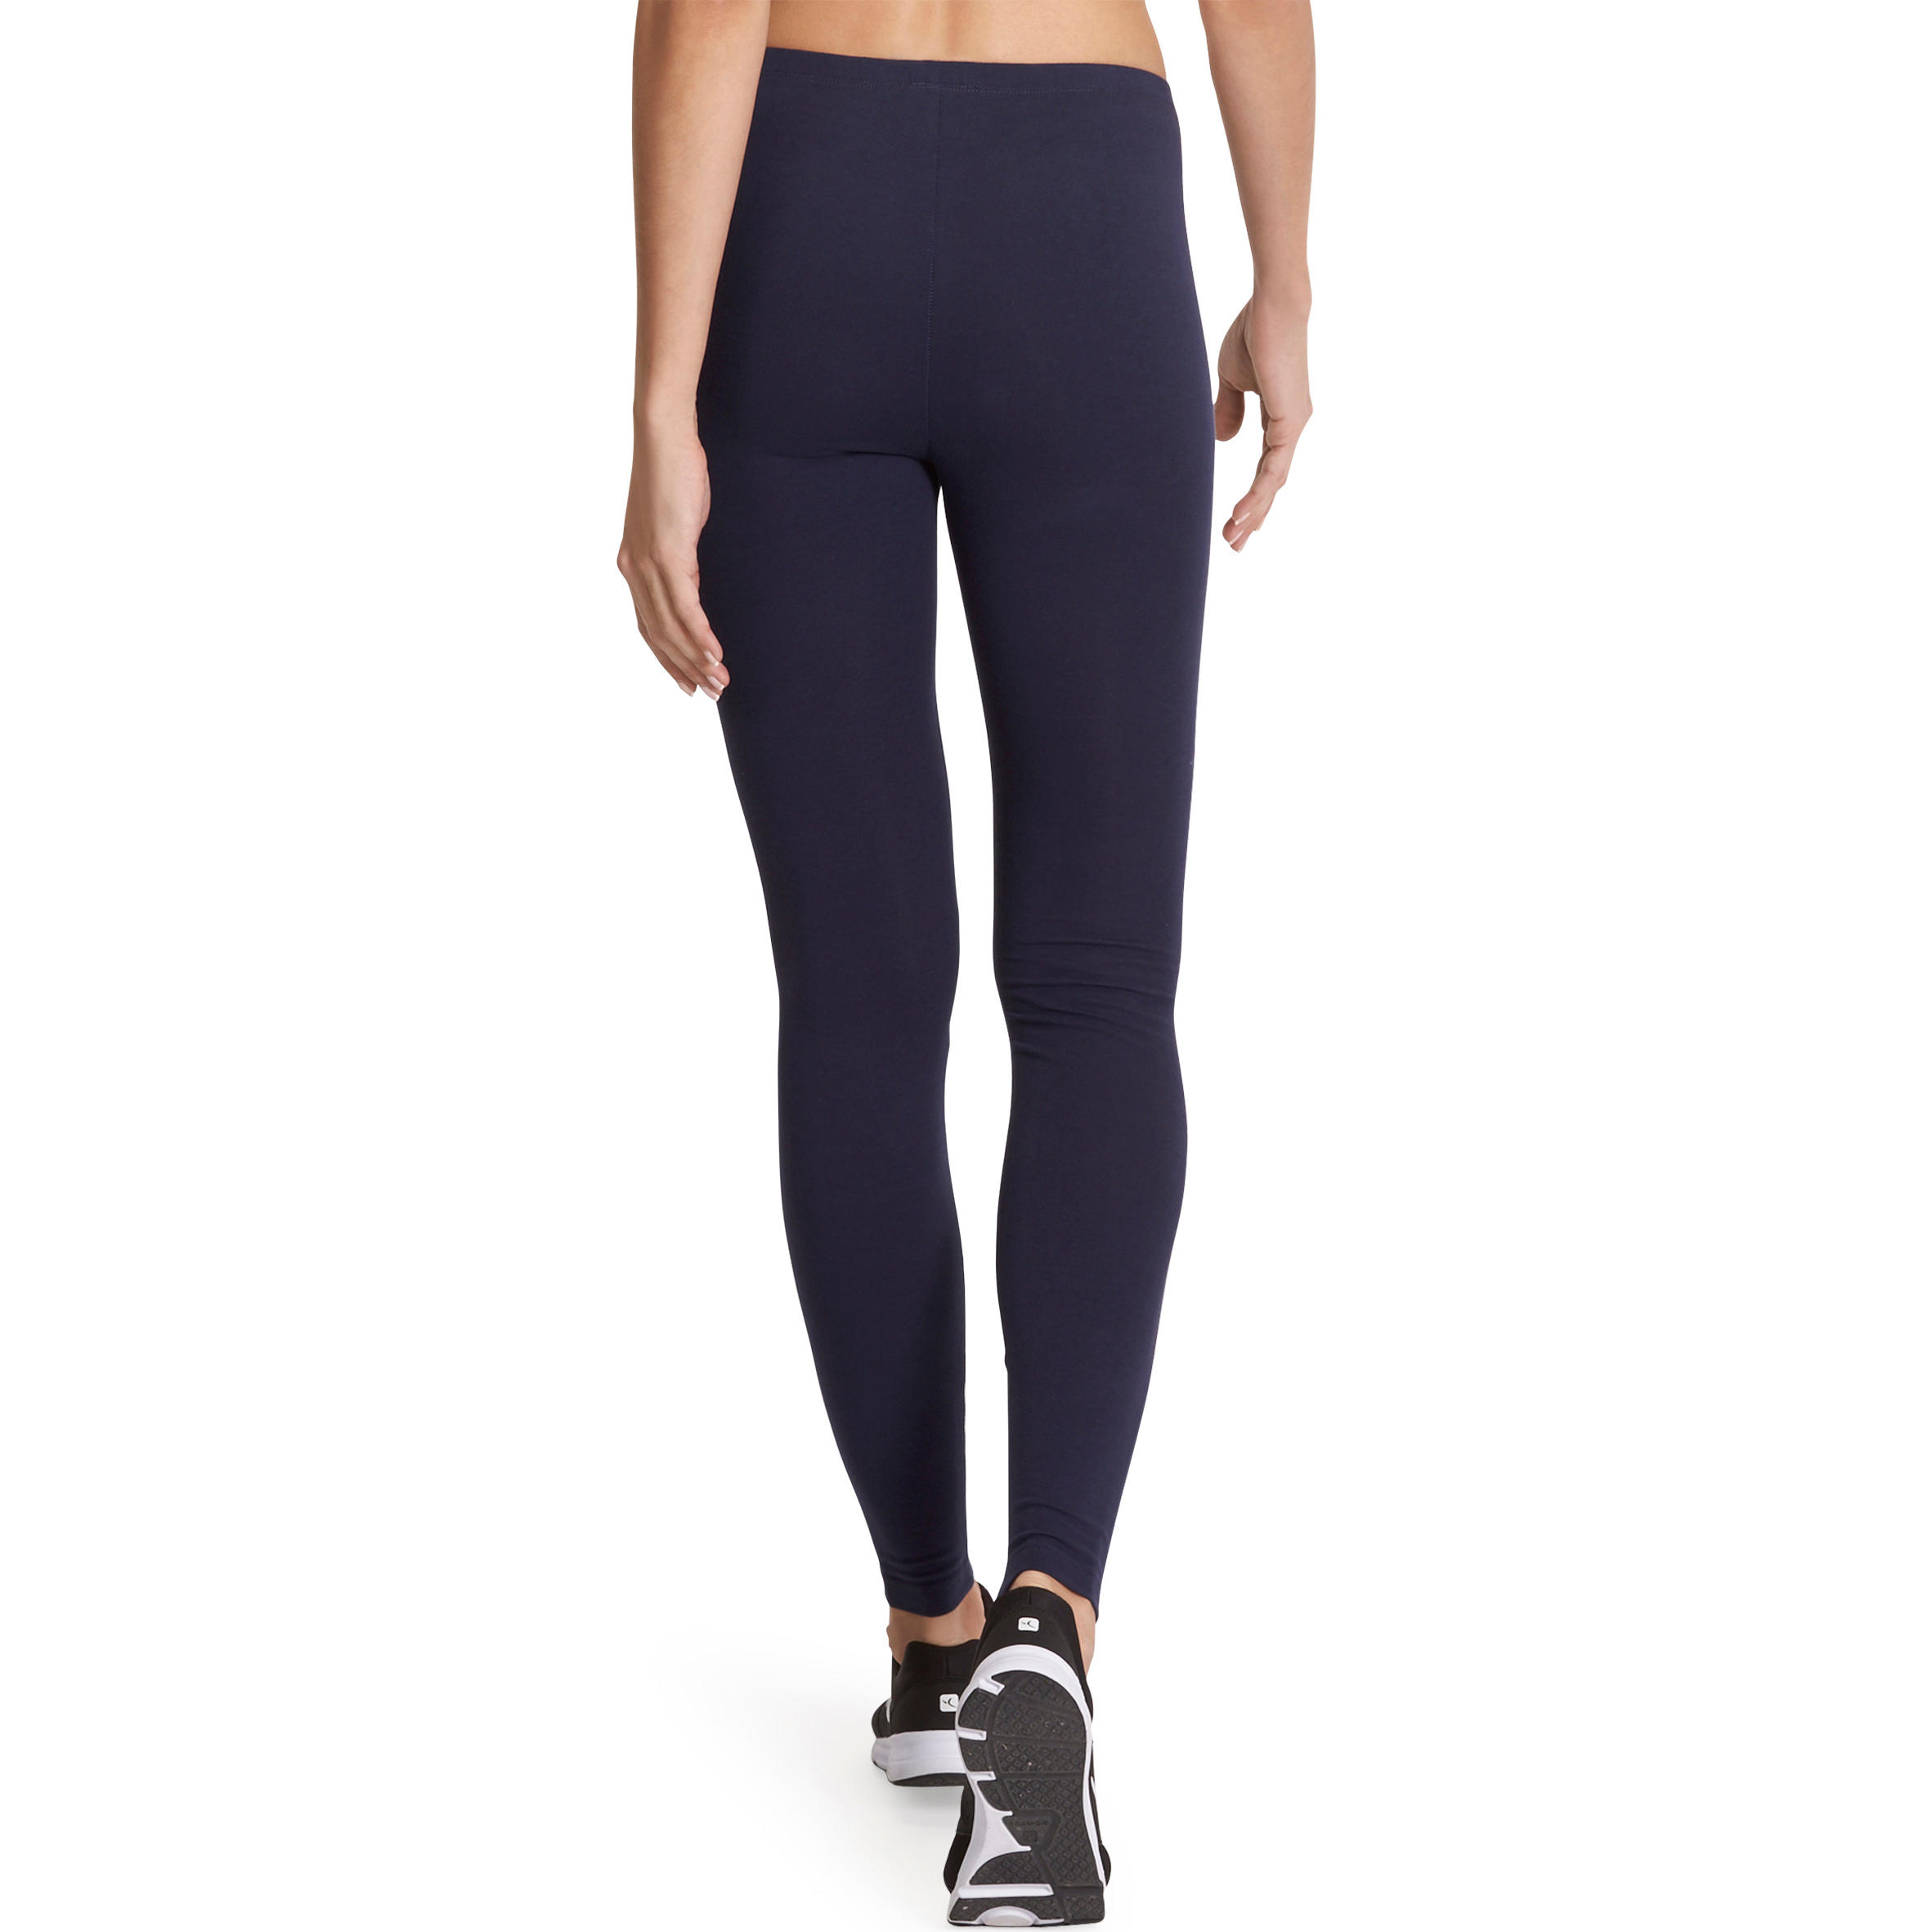 Salto 100 Women's Slim-Fit Stretching Leggings - Navy Blue 4/10